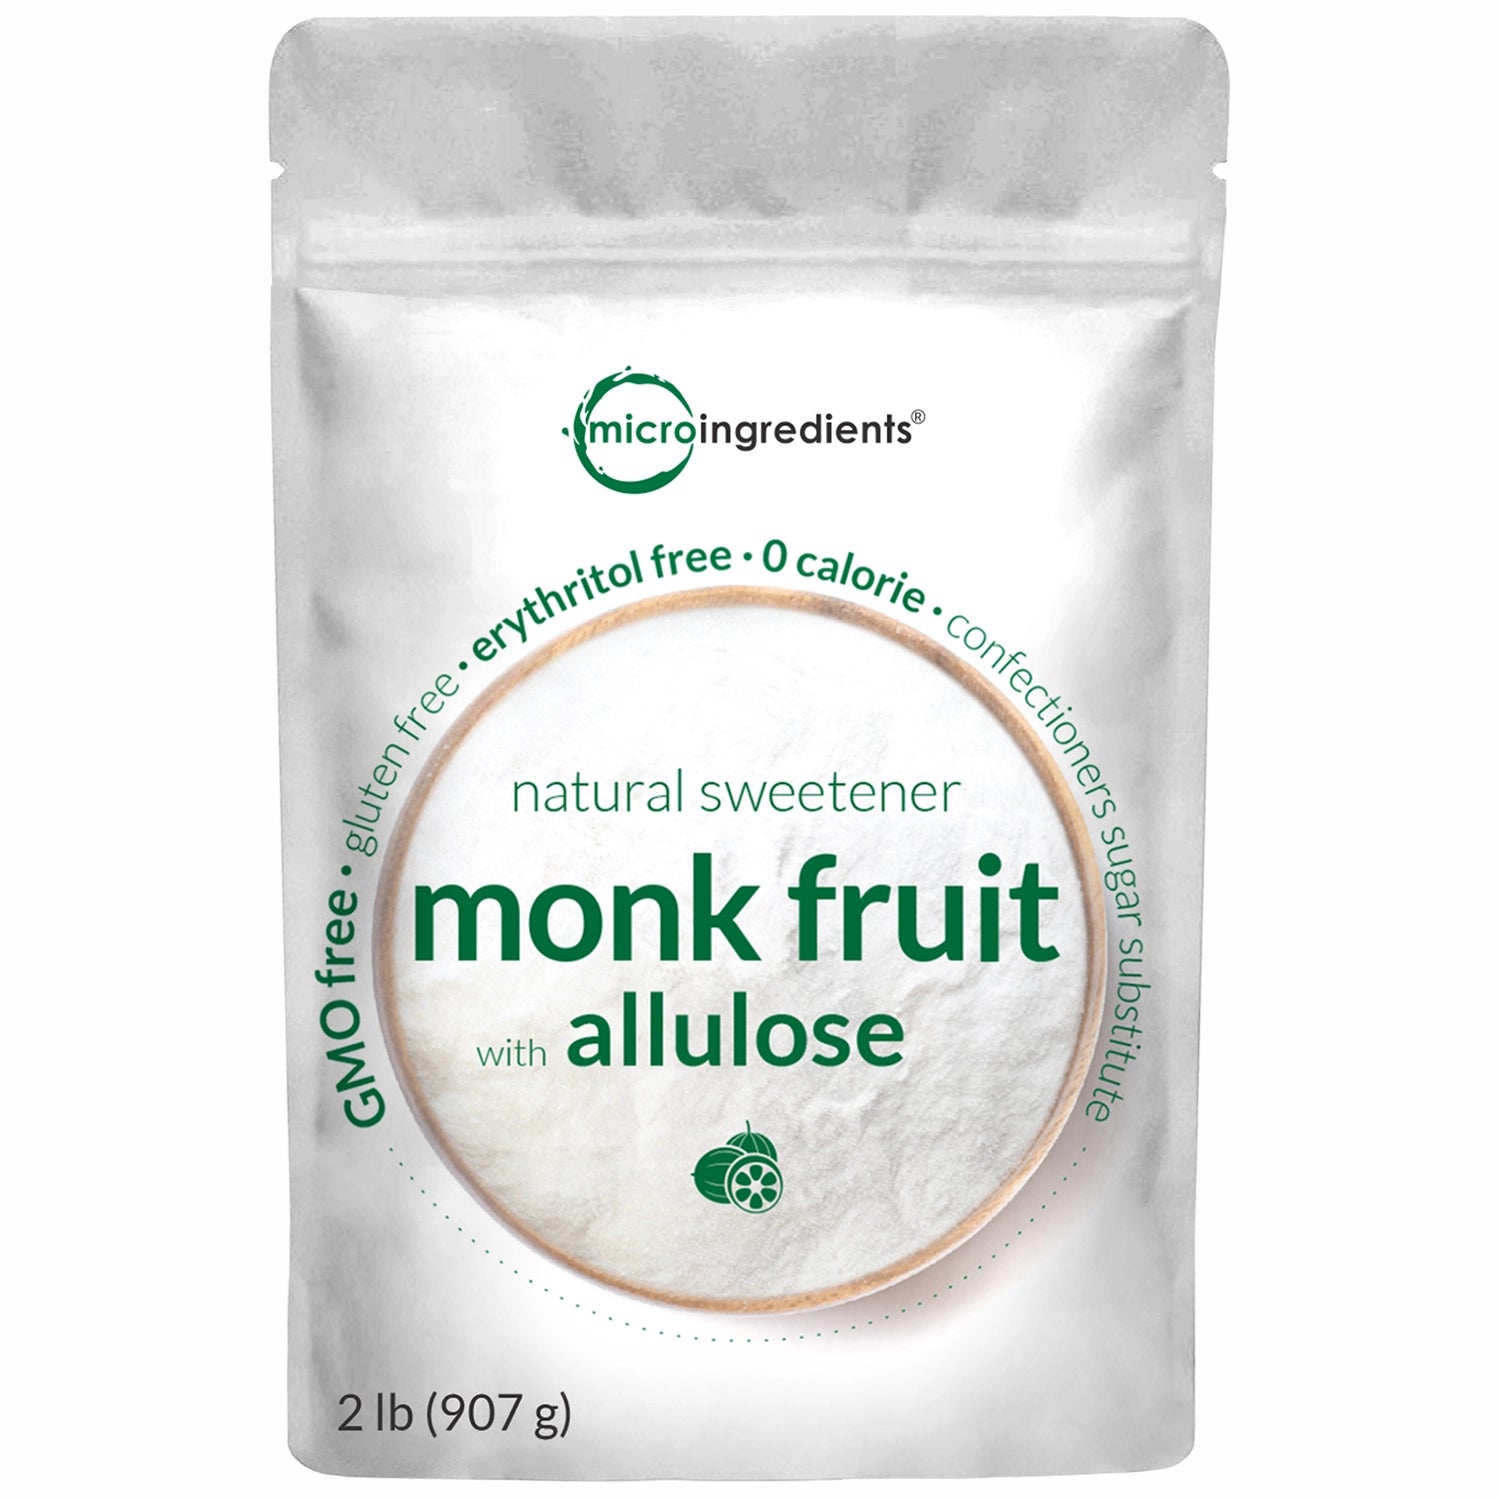 Powdered Monkfruit and Erythritol Sweetener - Powdered Sugar Replacement